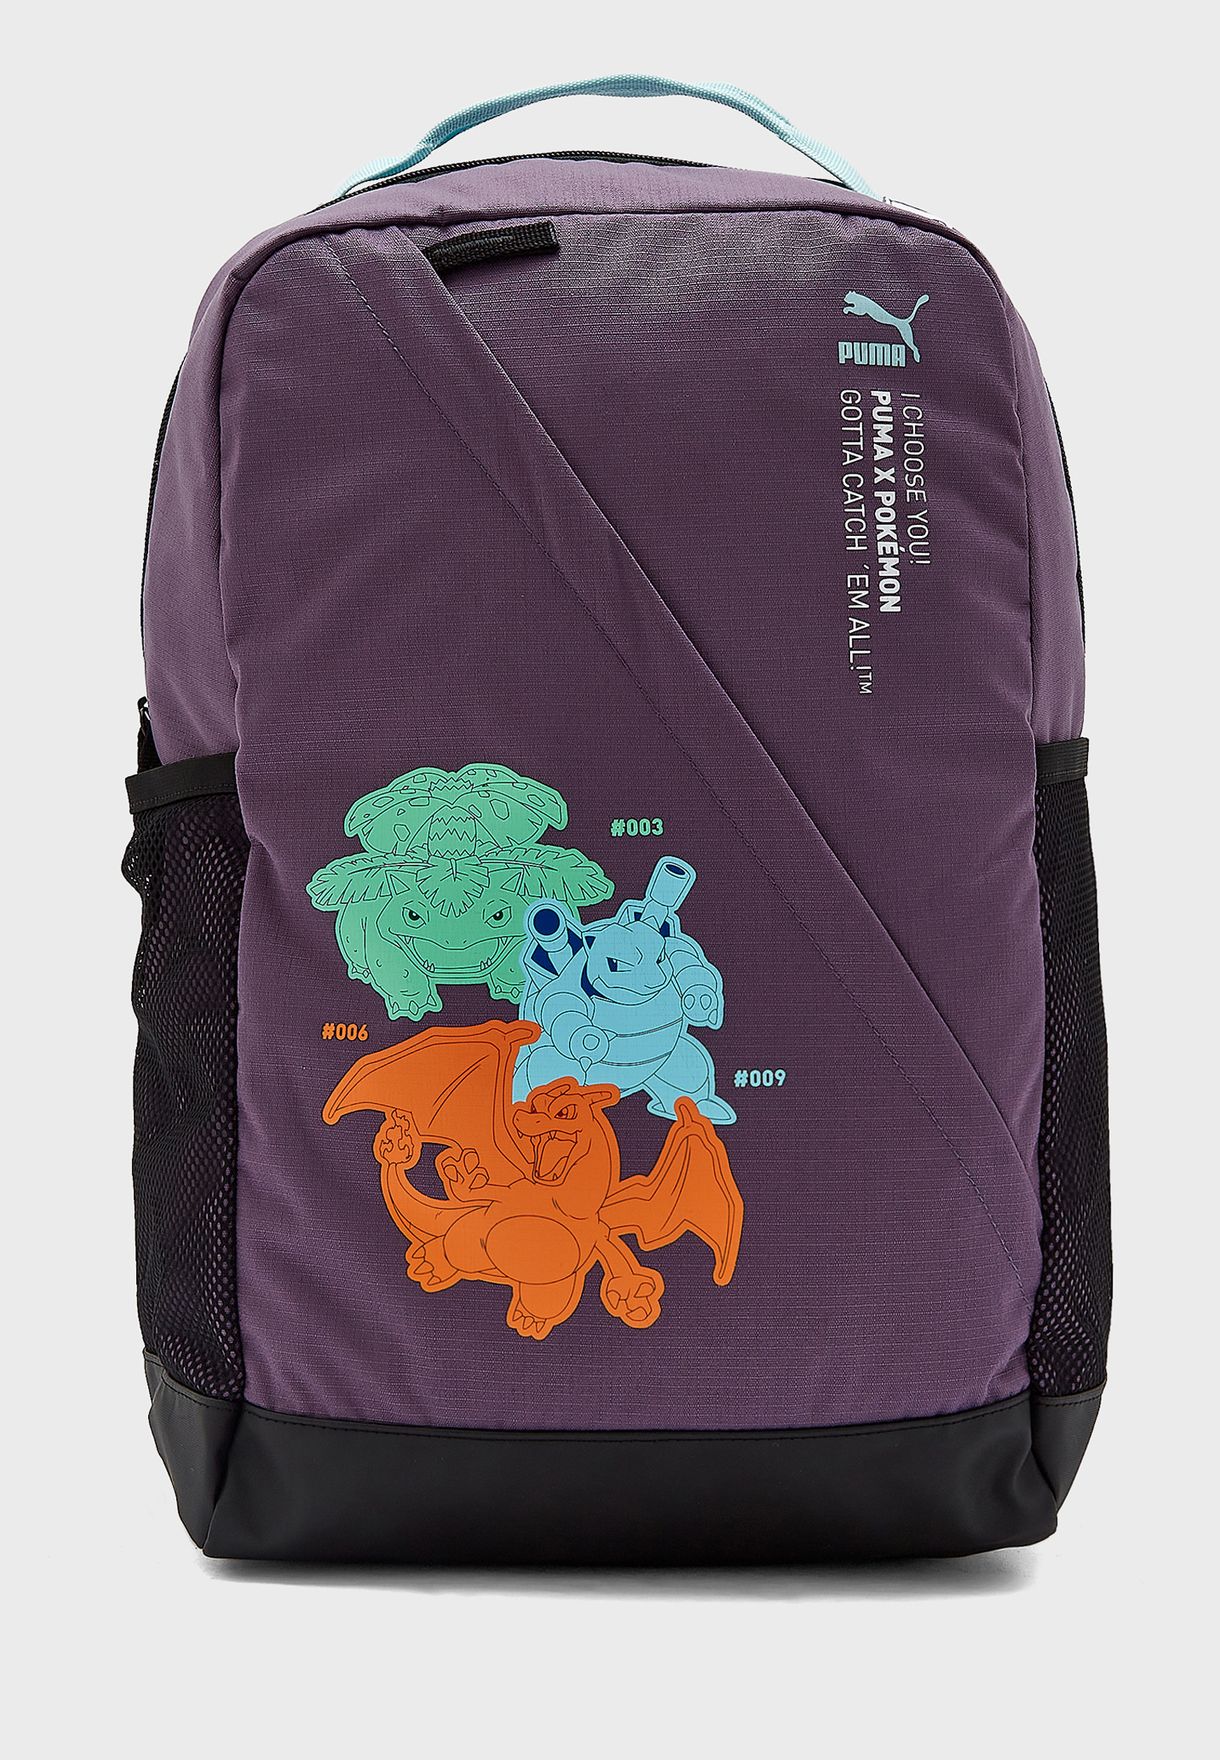 Puma X Pokemon Kids Backpack